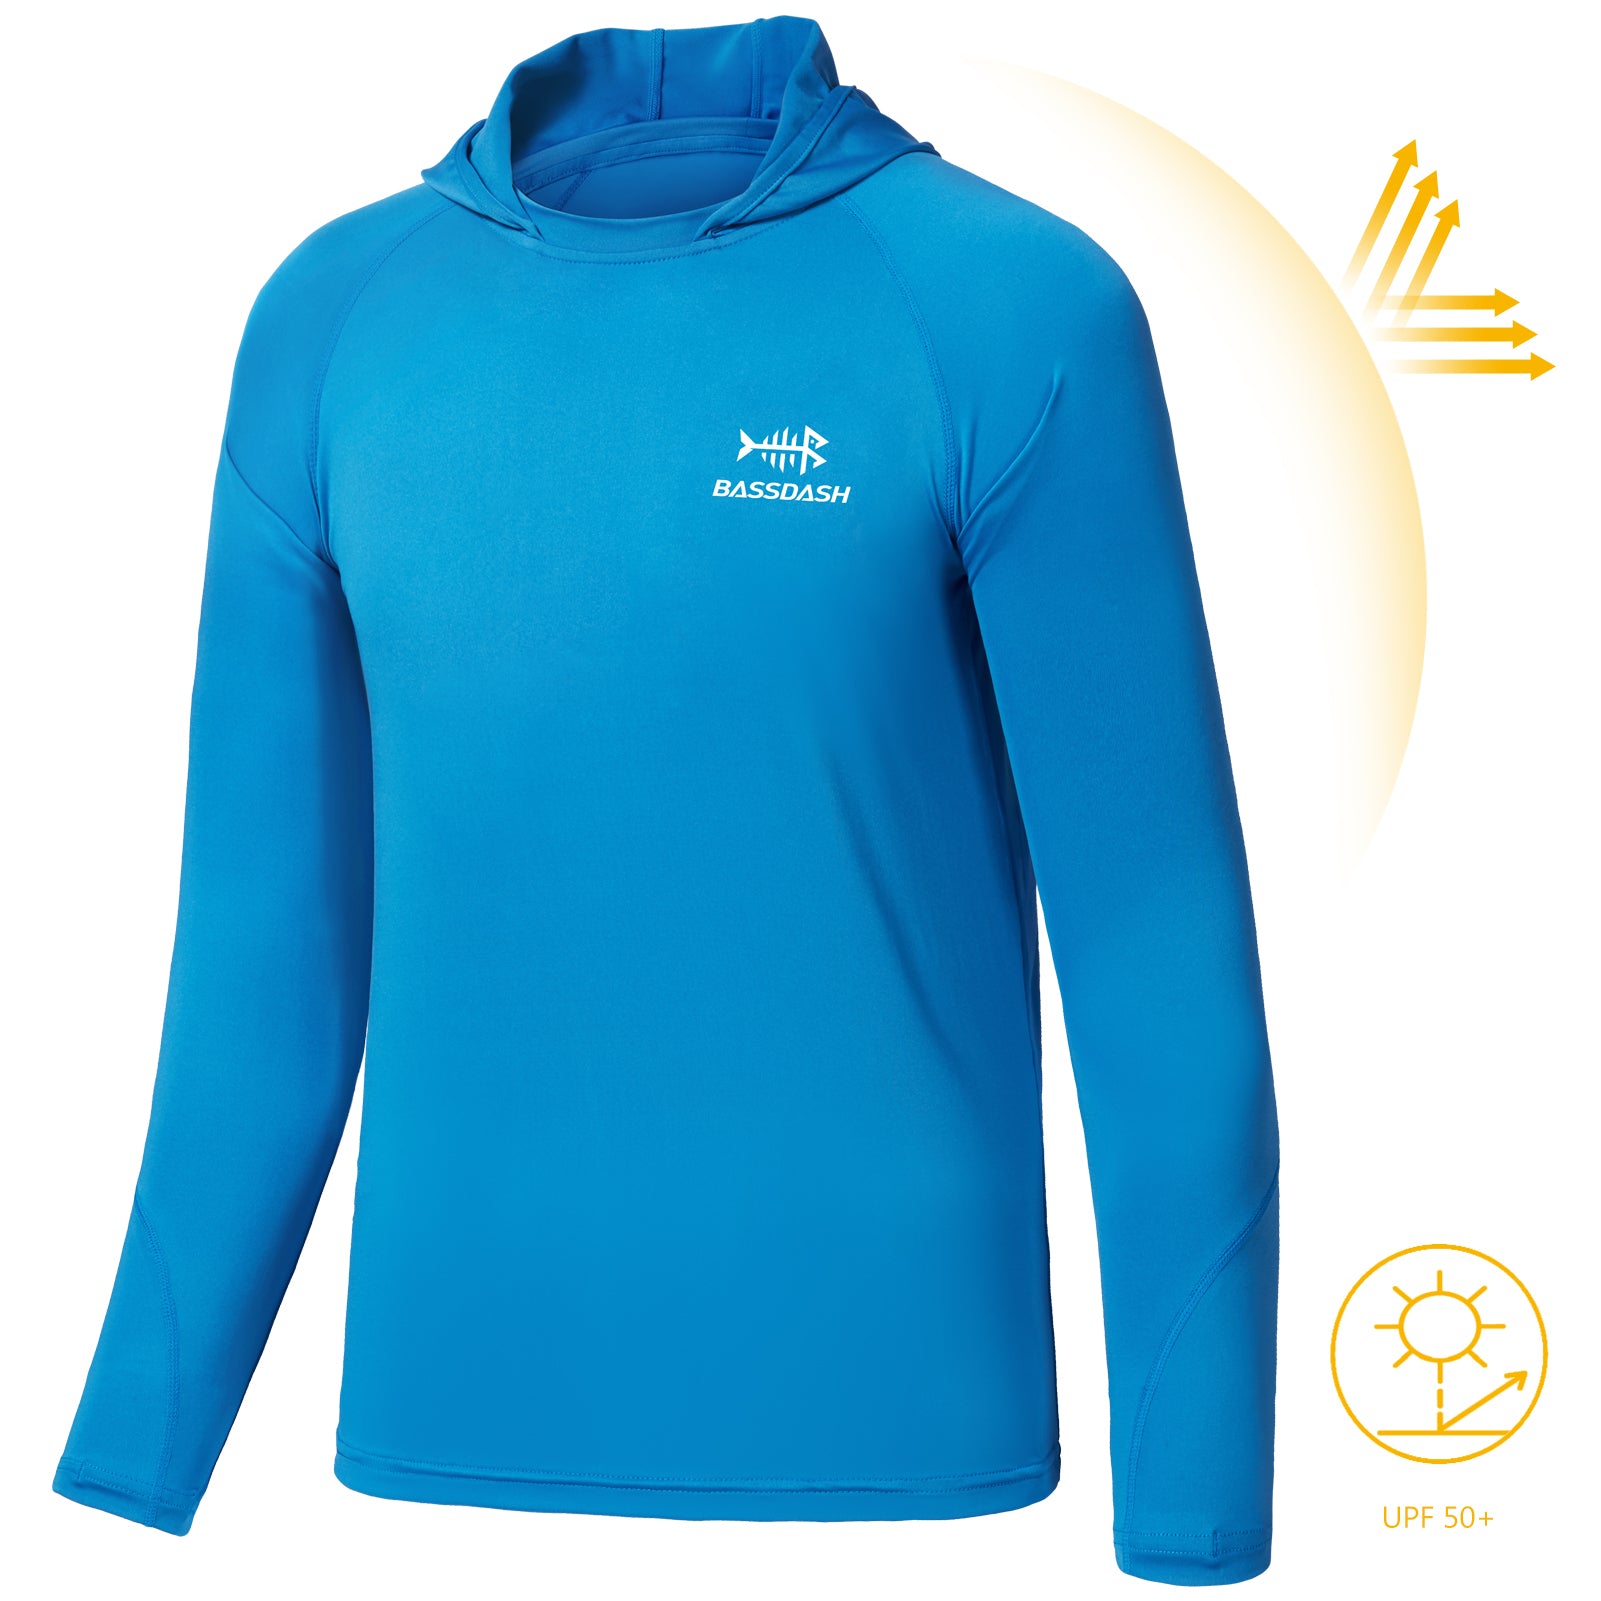 LEEy-world Boys Hoodies Men's Workout Long Sleeve Fishing Shirts UPF 50+  Sun Protection Dry Fit Hoodies Light Blue,M 